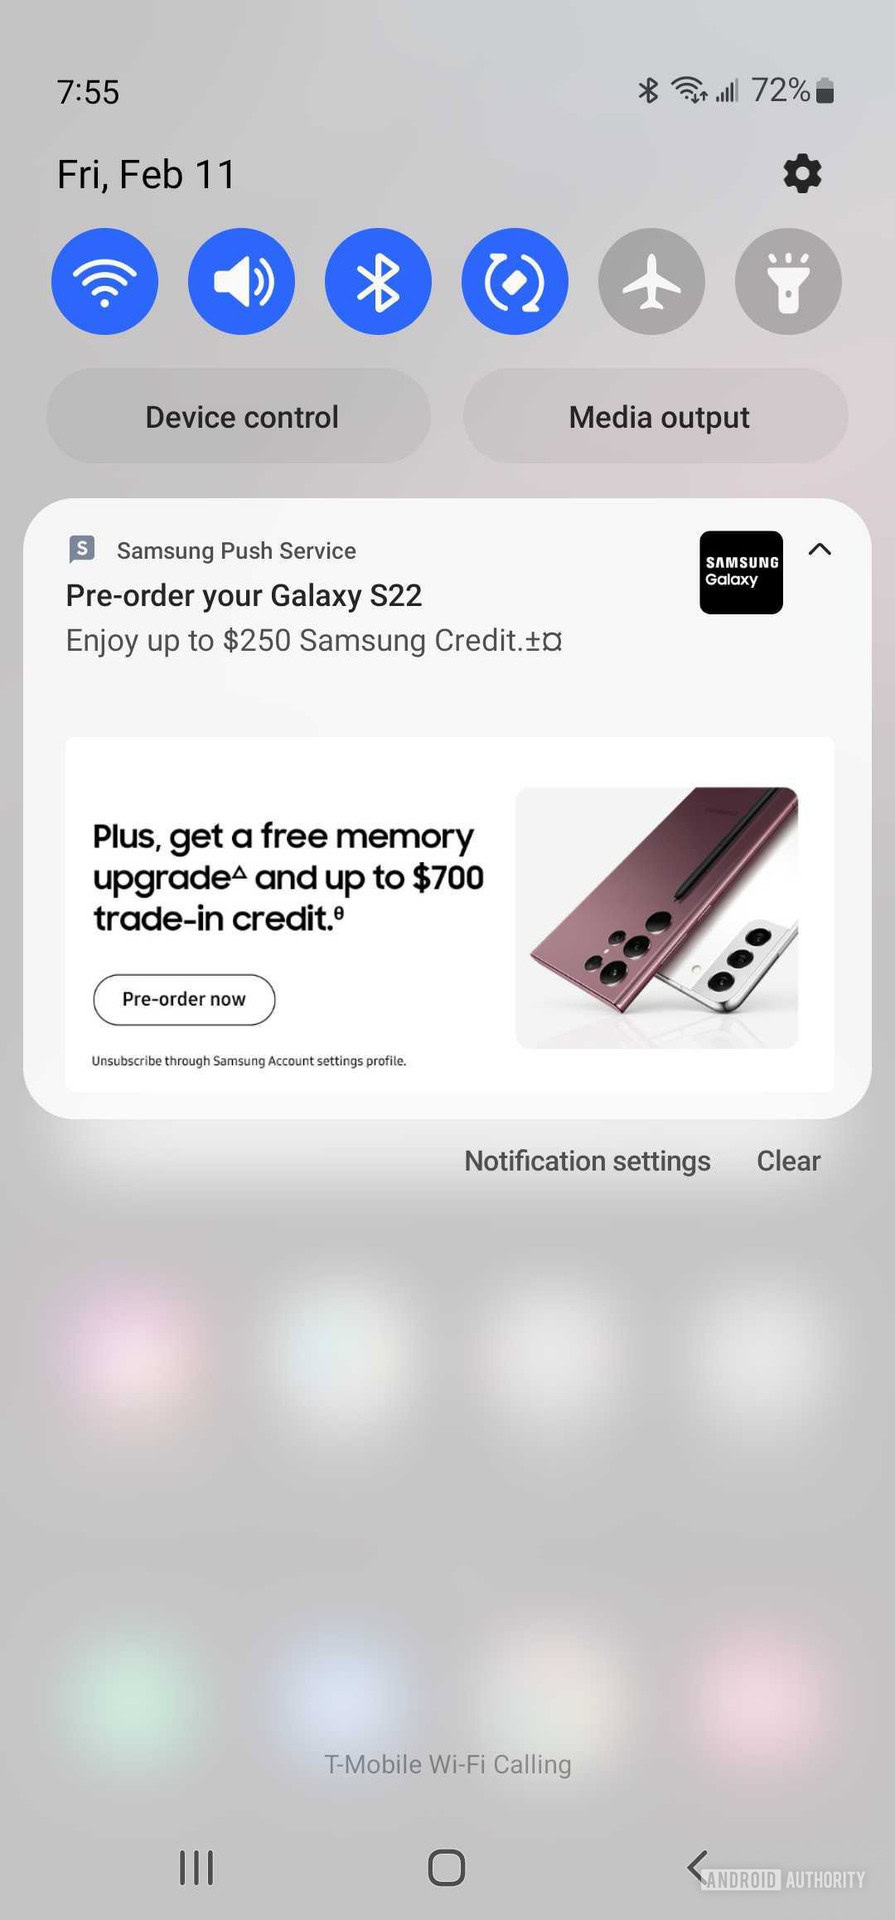 Samsung Galaxy S22 Ultra ads